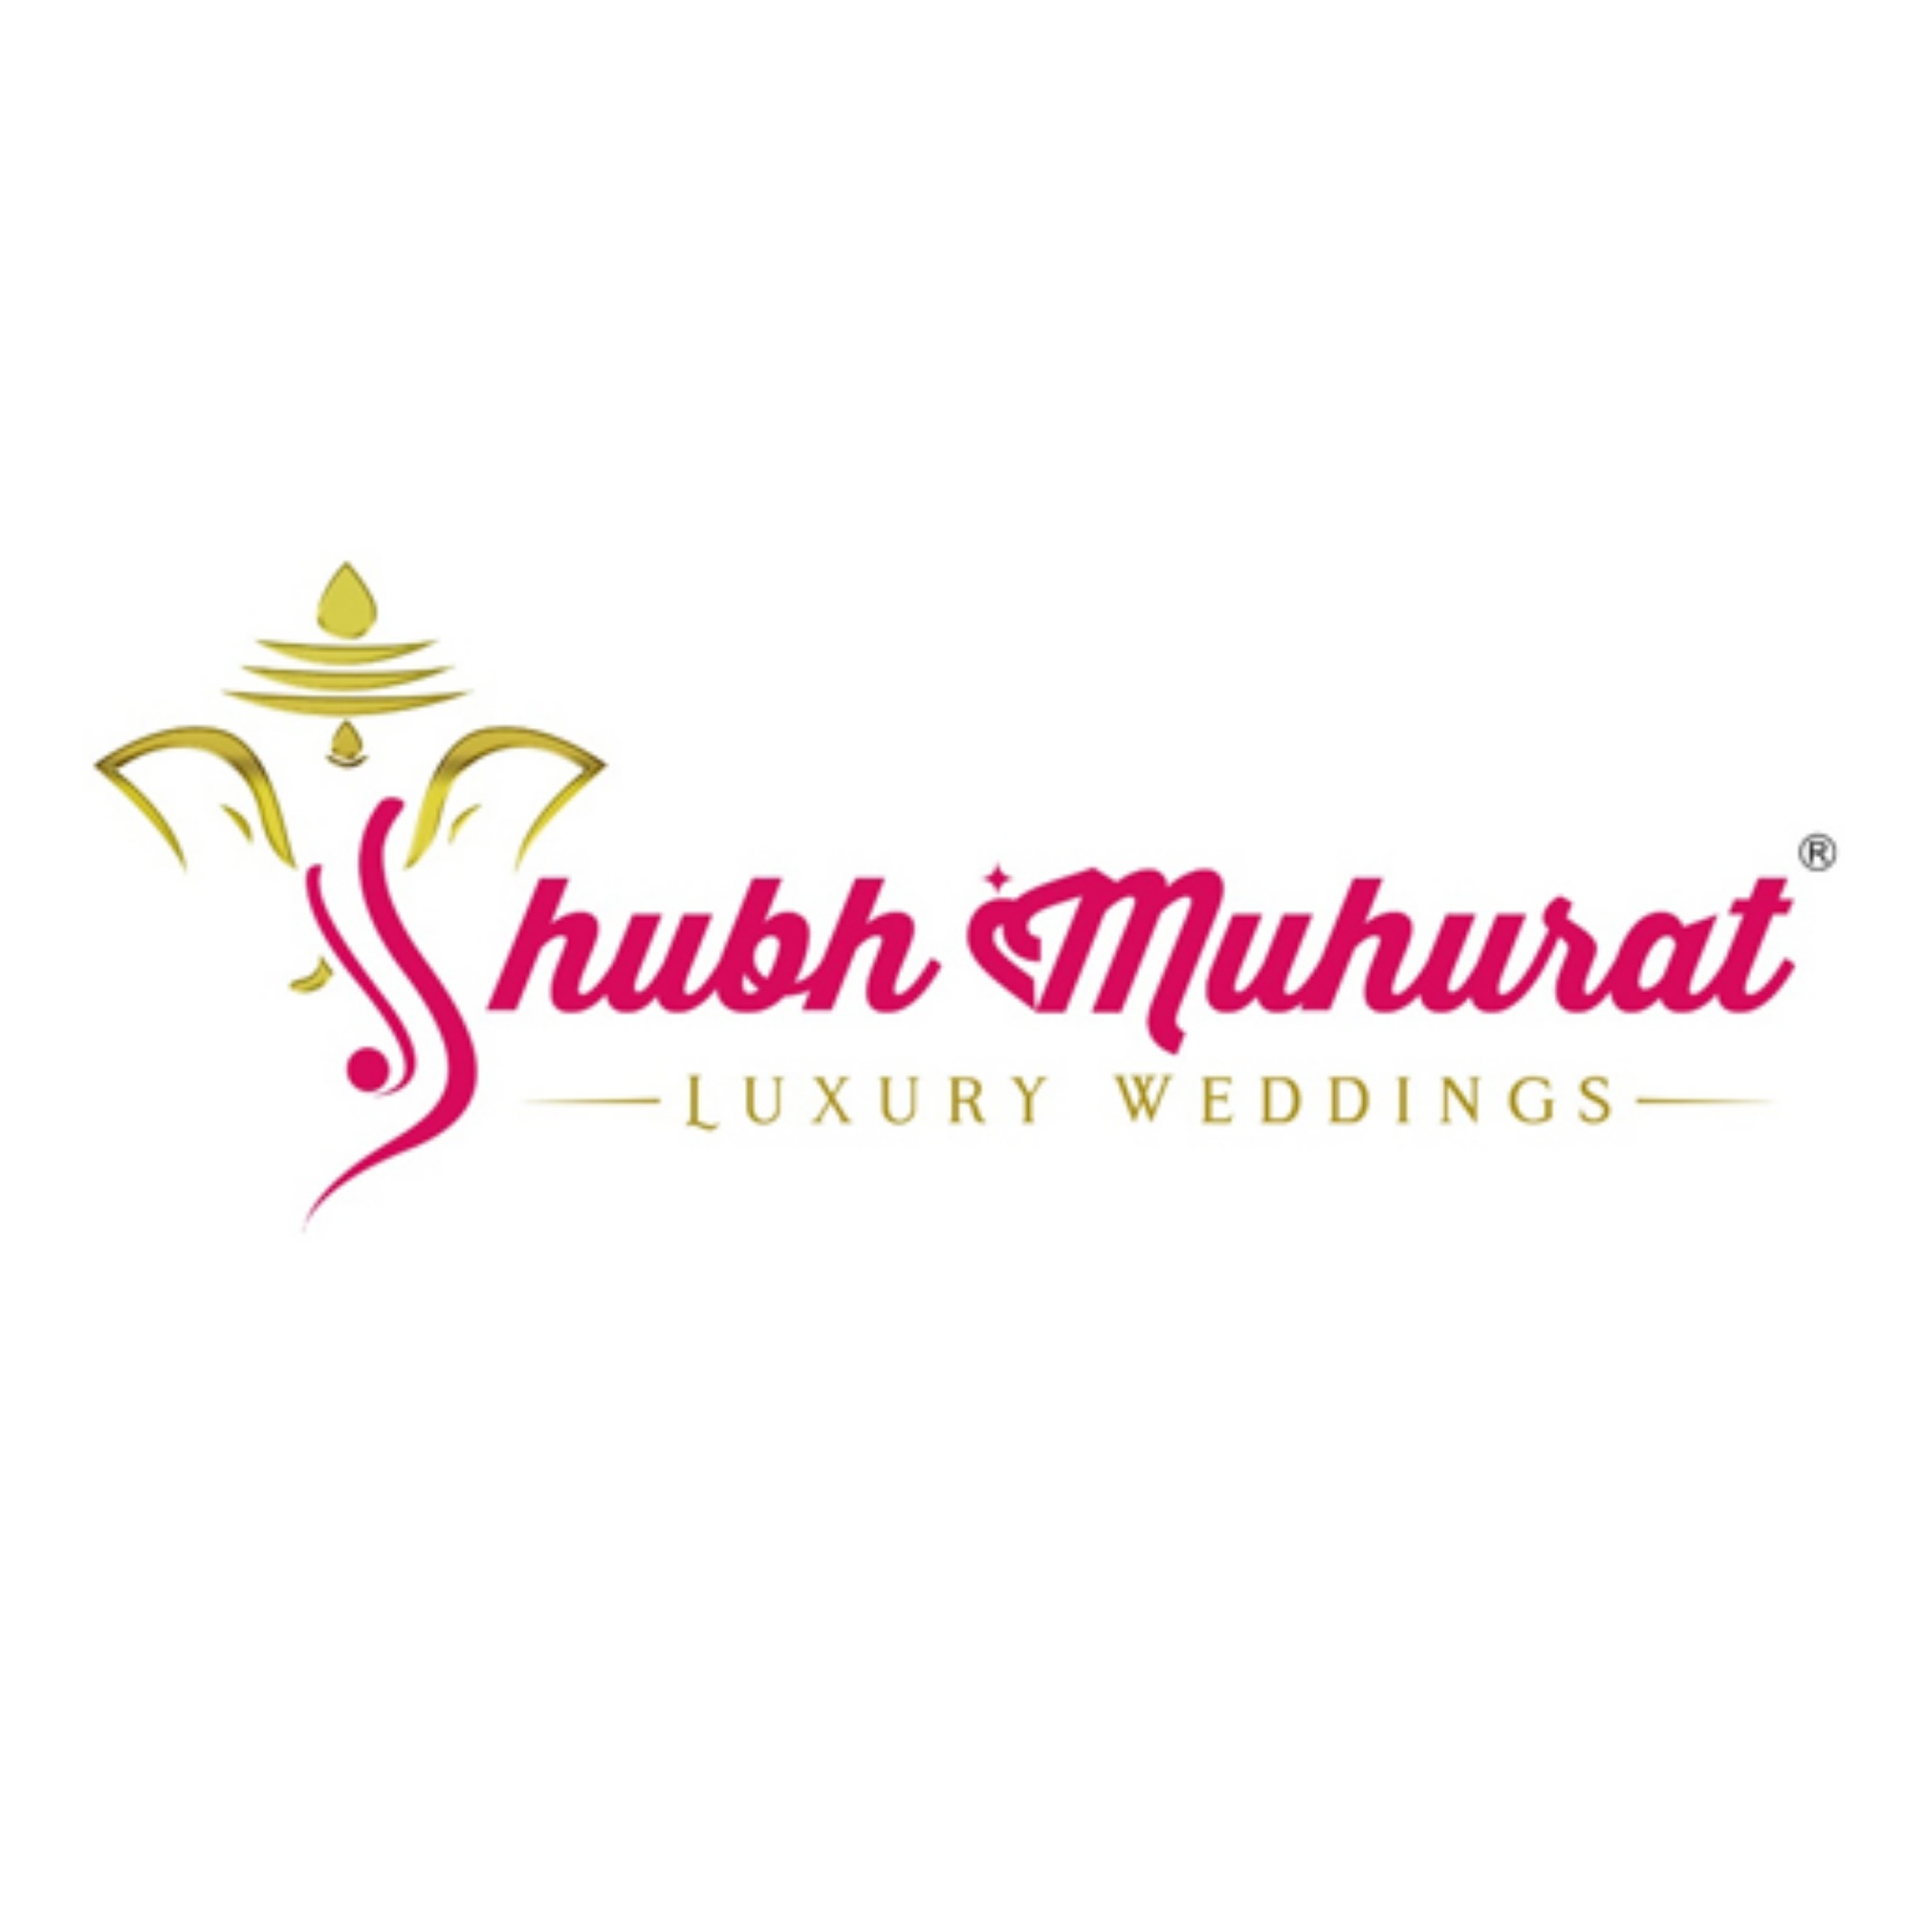 Subh Muhurat Luxury Weddings